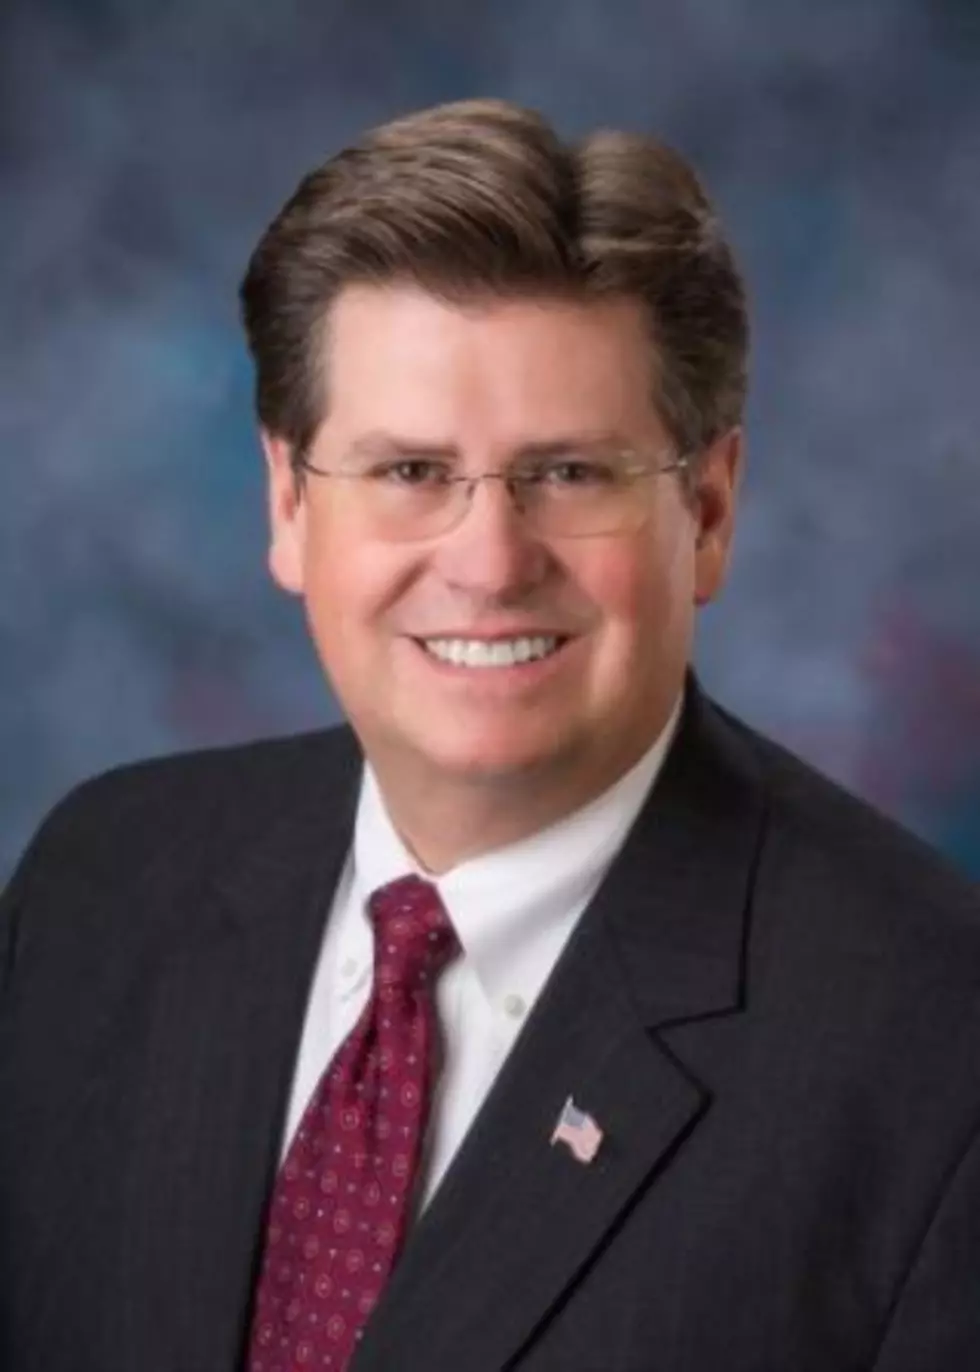 Rupert Legislator Chosen as Idaho Insurance Head